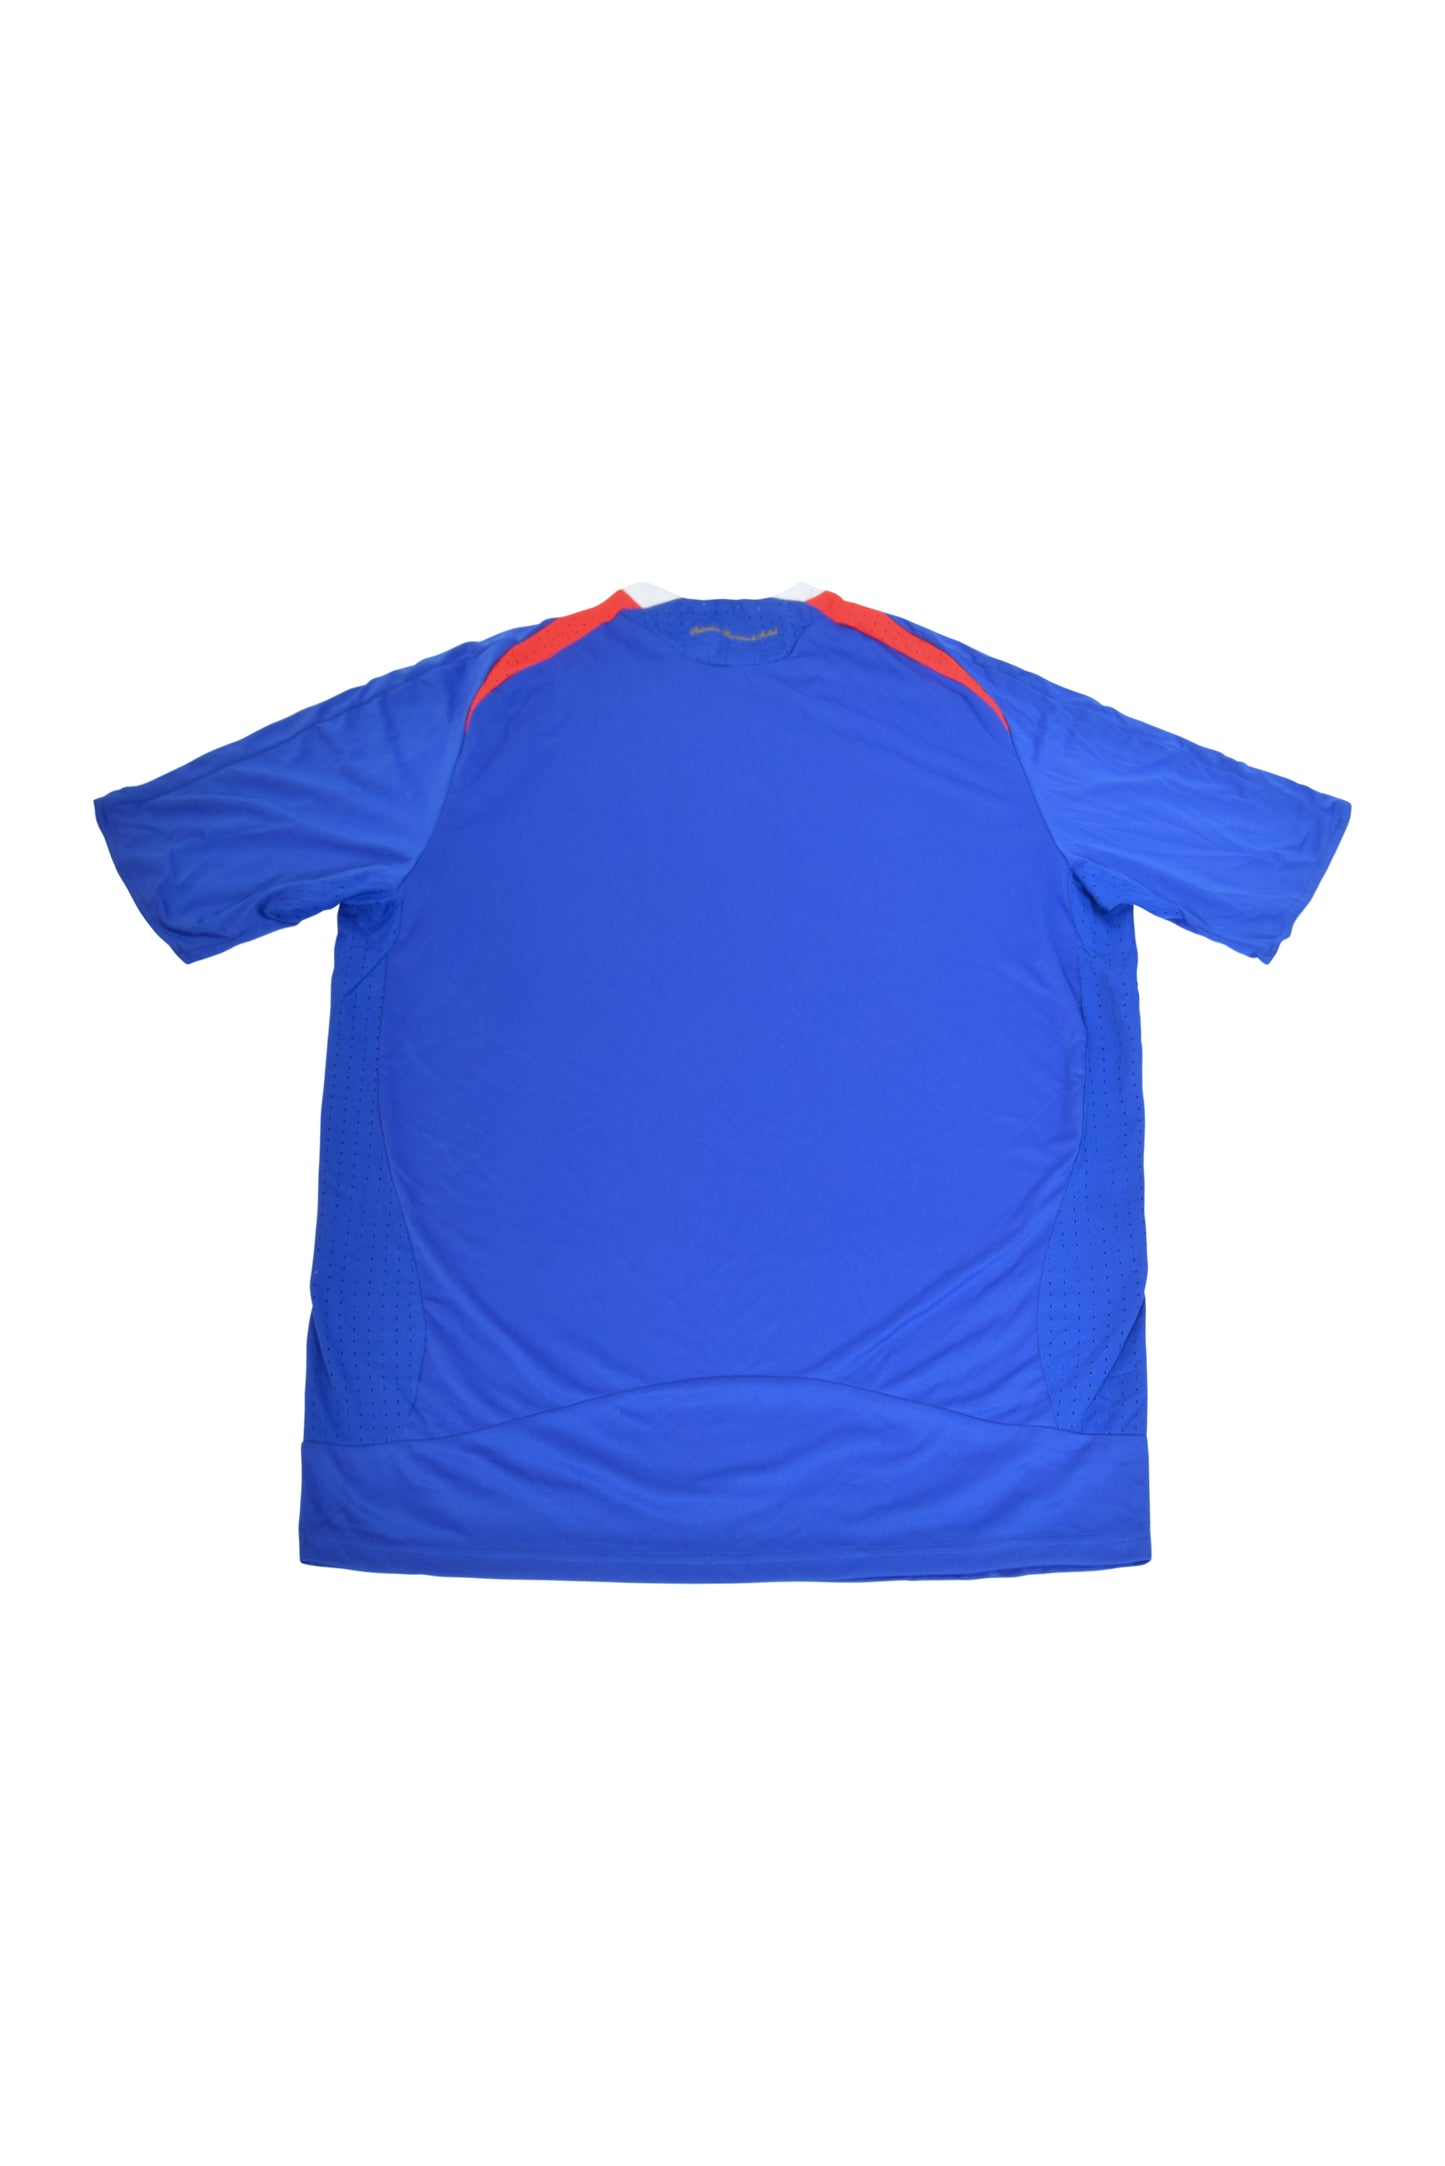 France Adidas 2008 - 2009 Home Football Shirt Blue